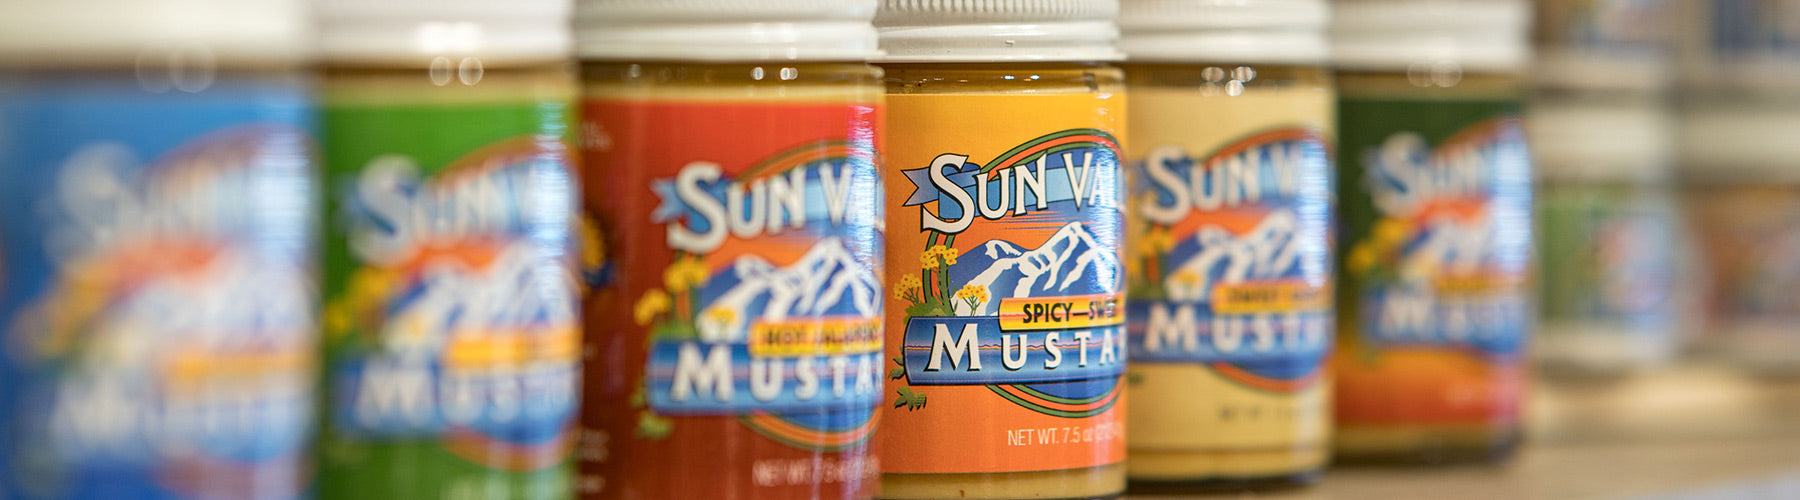 Made in Idaho Sun Valley Mustard